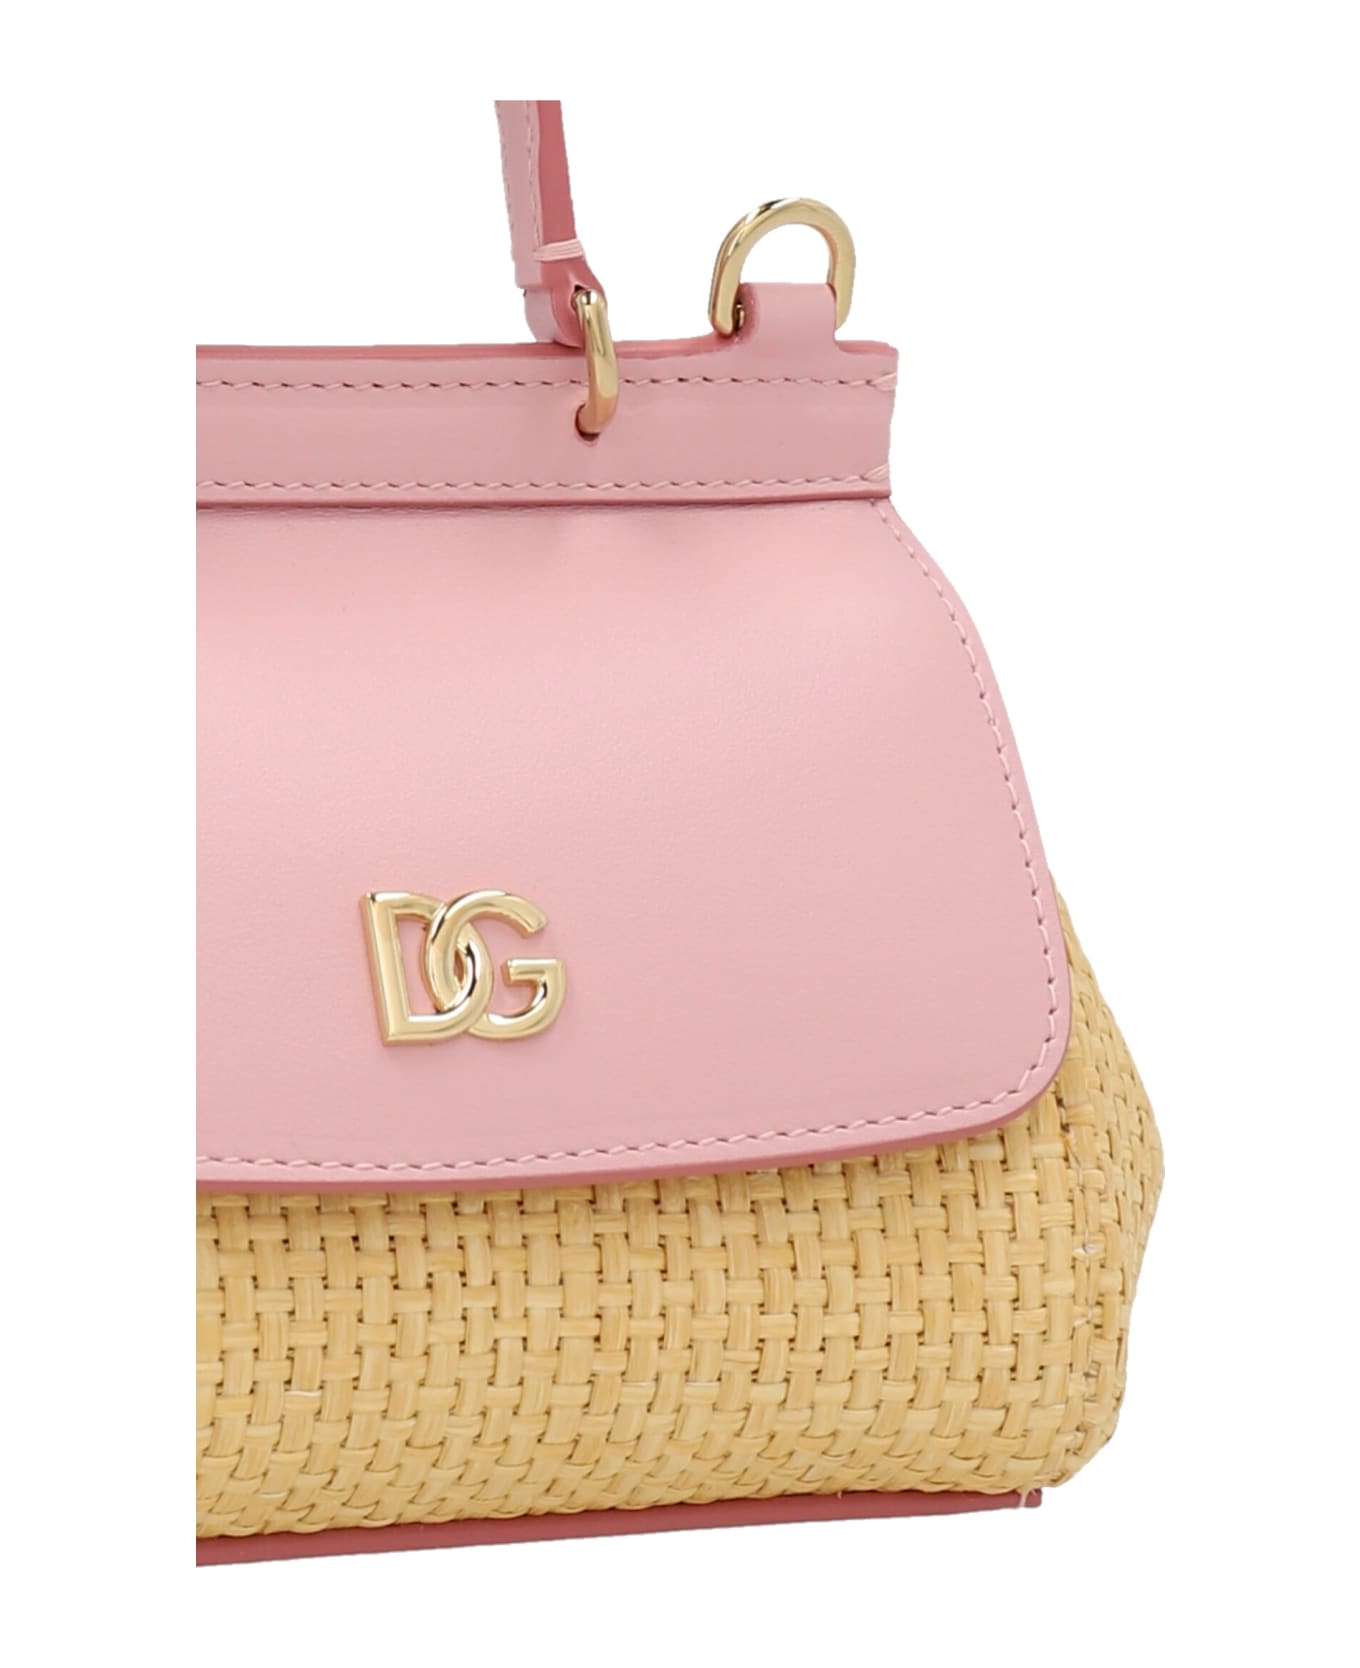 Dolce & Gabbana 'miss Sicily' Handbag - Rosa Confetto